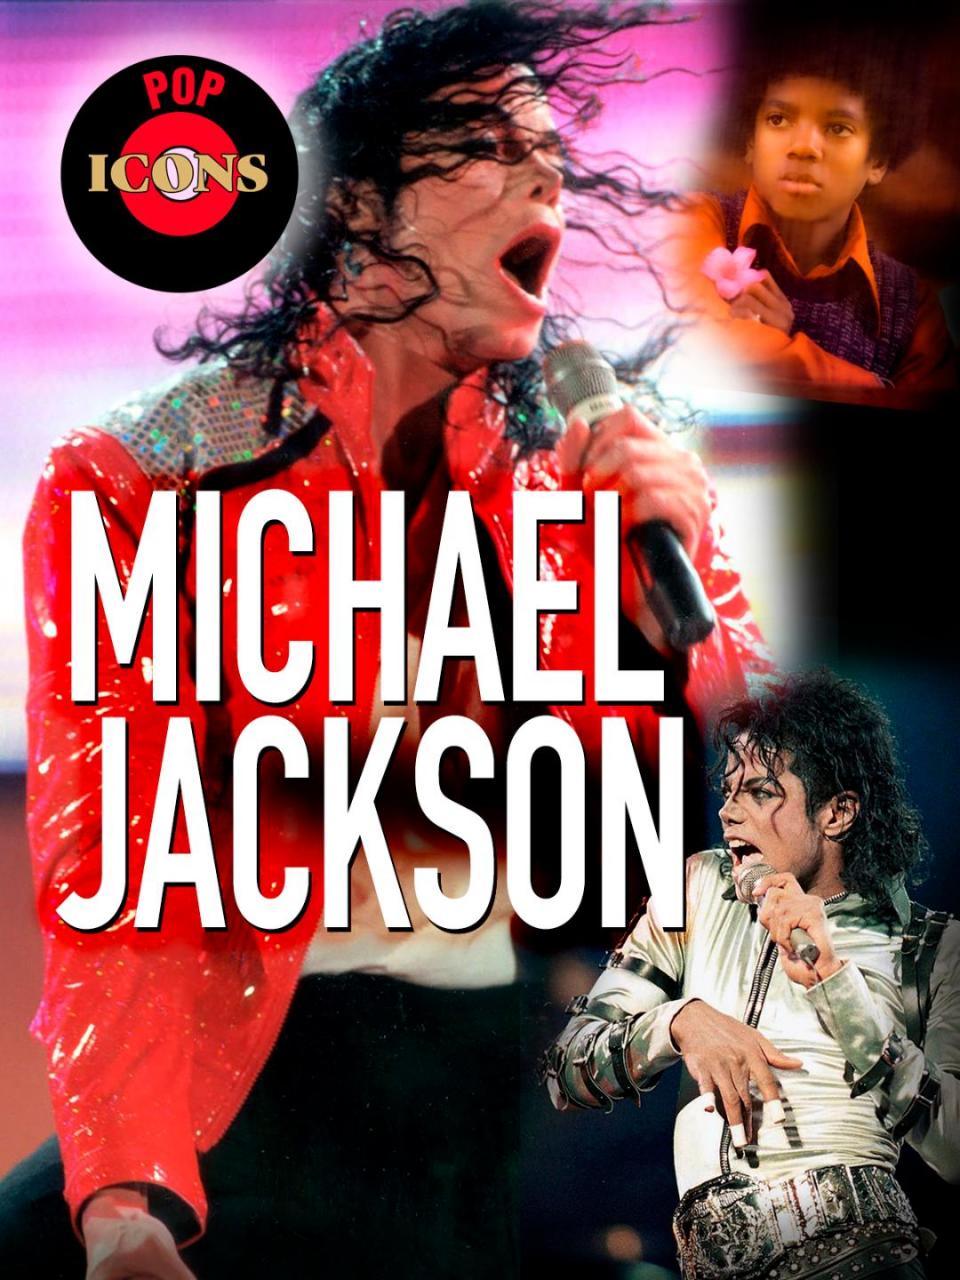 Pop Icons: Michael Jackson